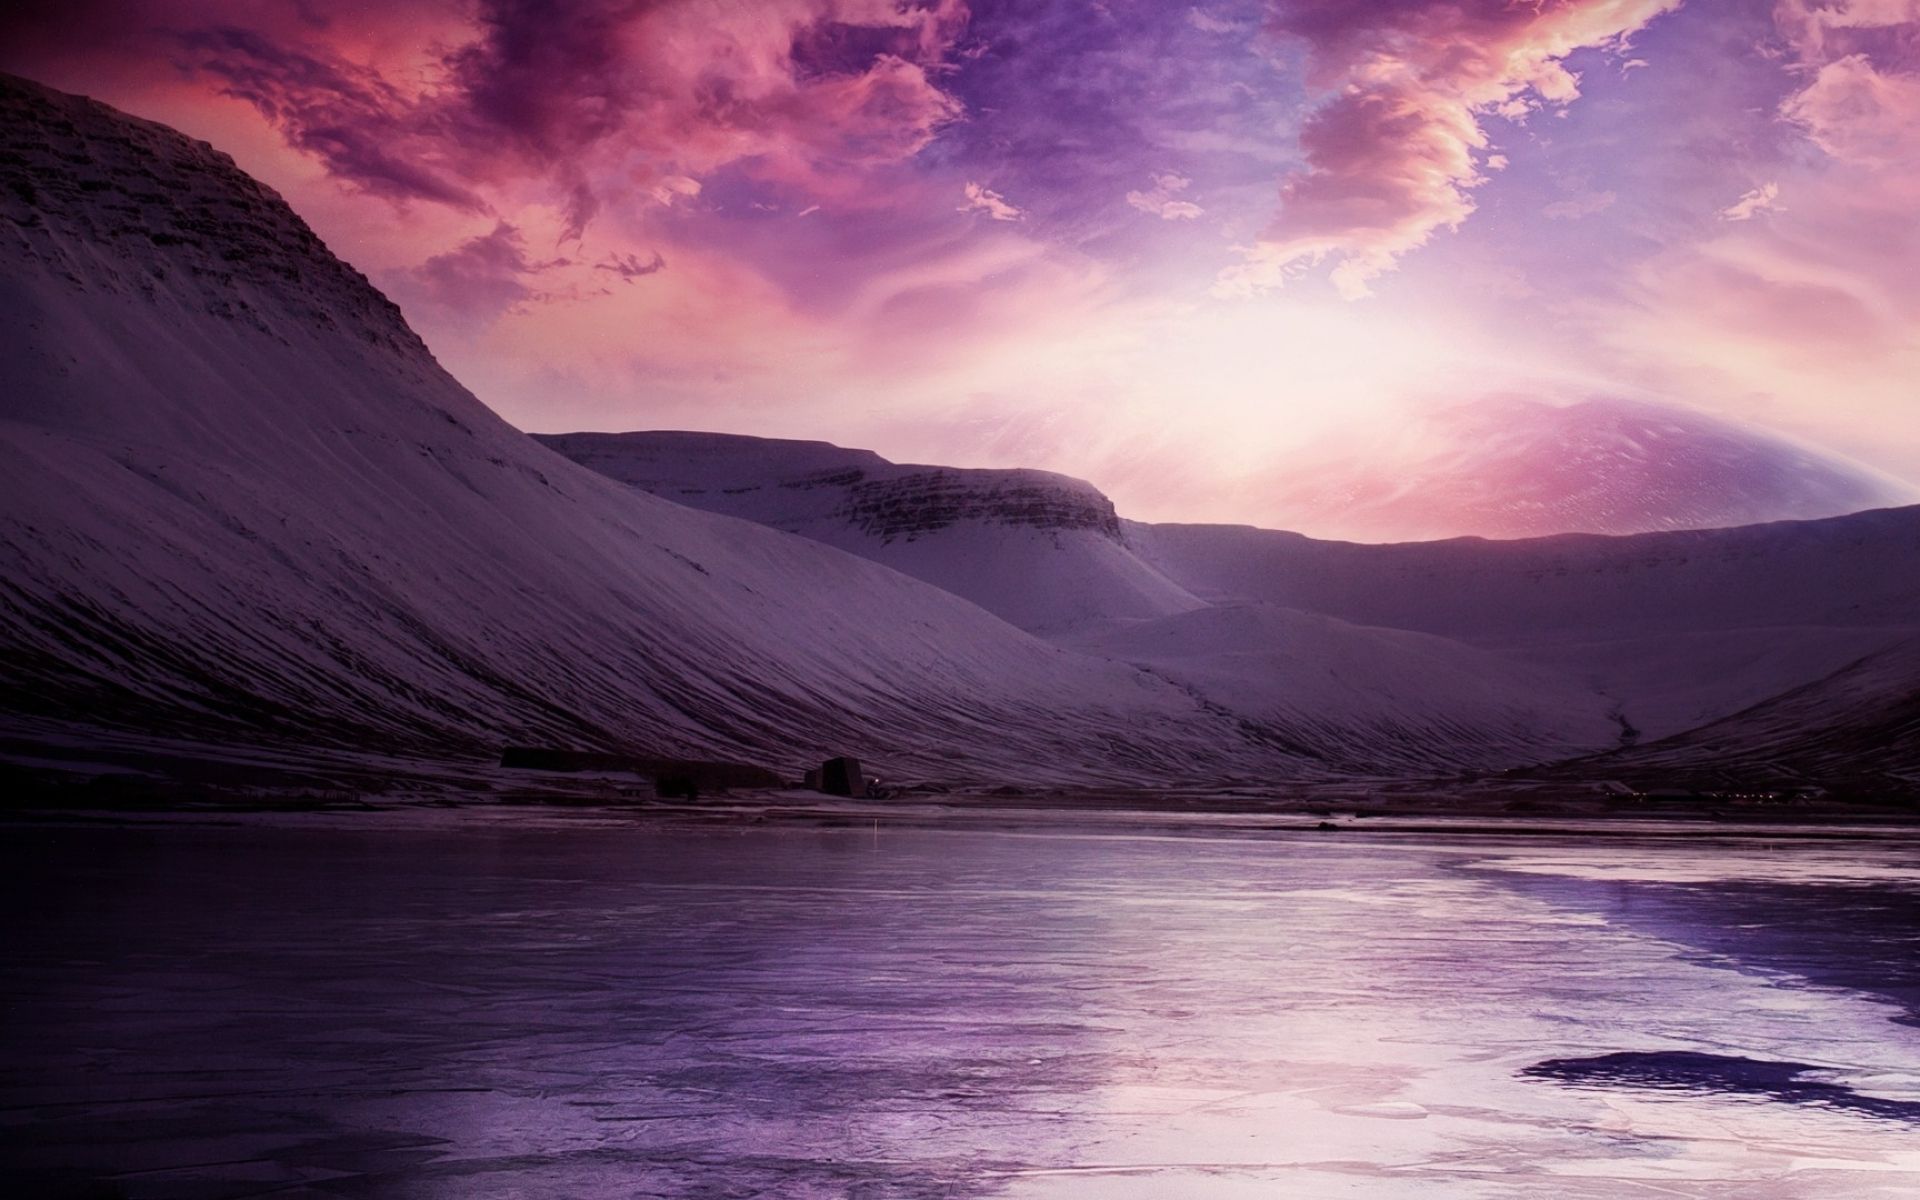 A purple sunset over a mountain lake - 1920x1200